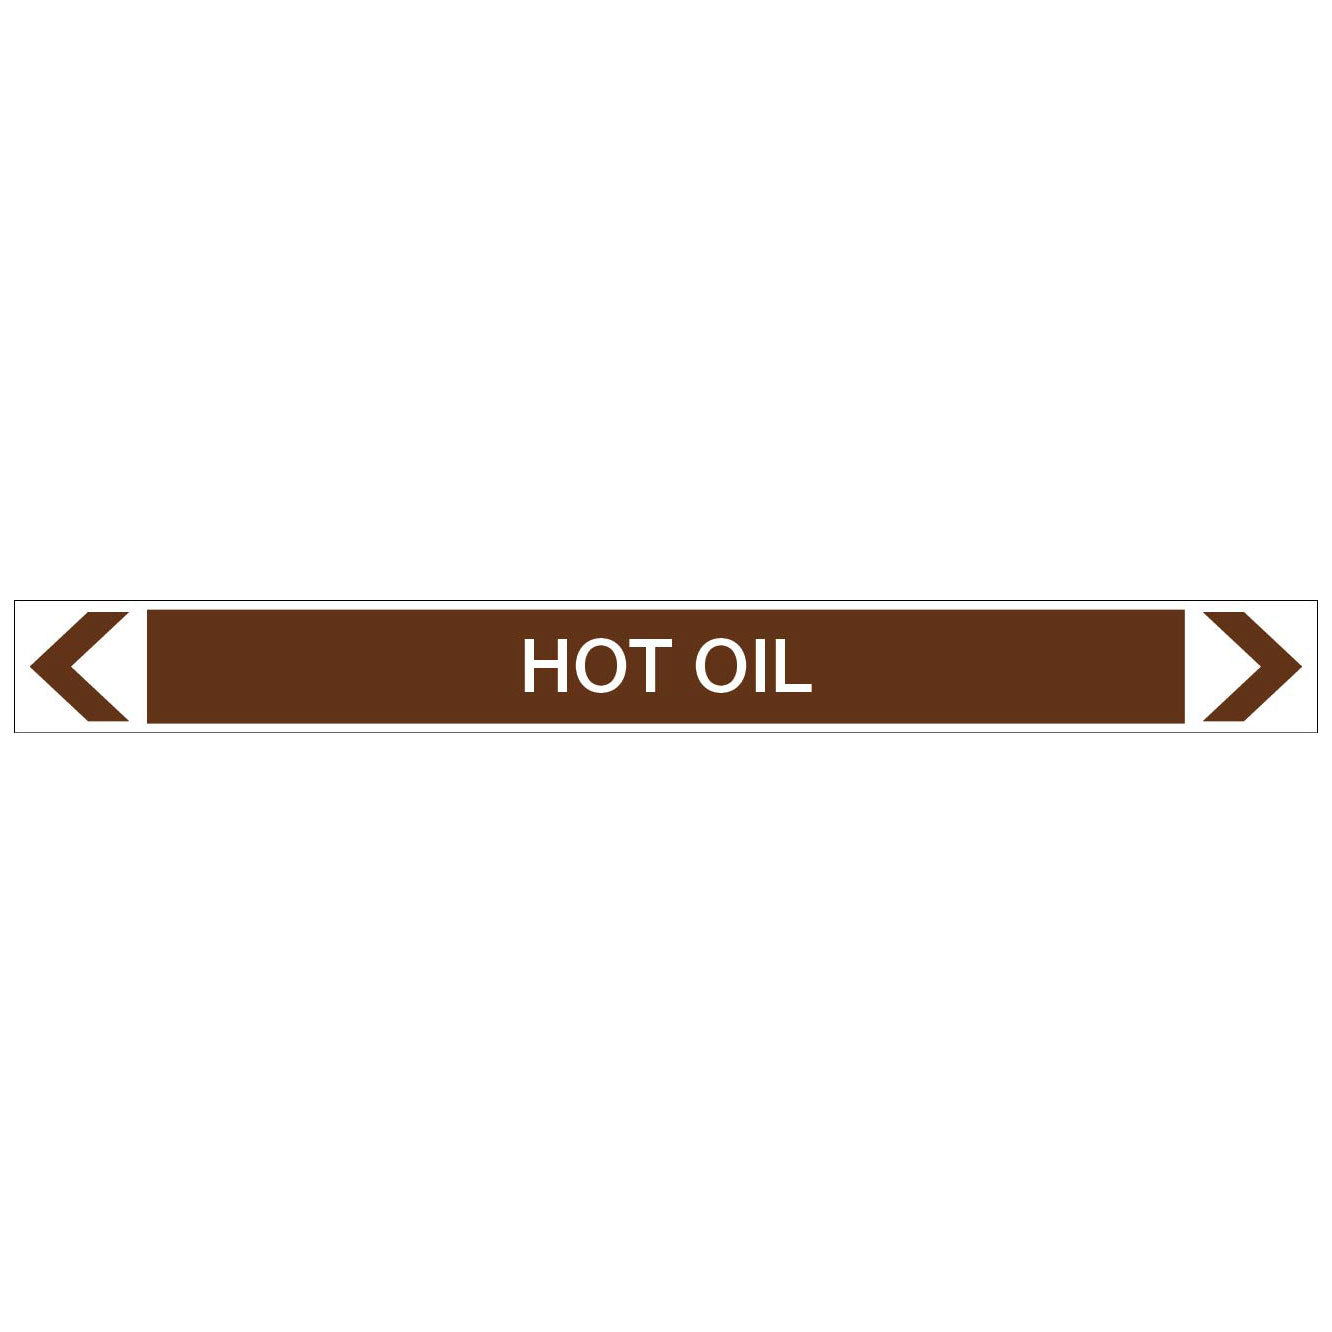 Oils - Hot Oil - Pipe Marker Sticker